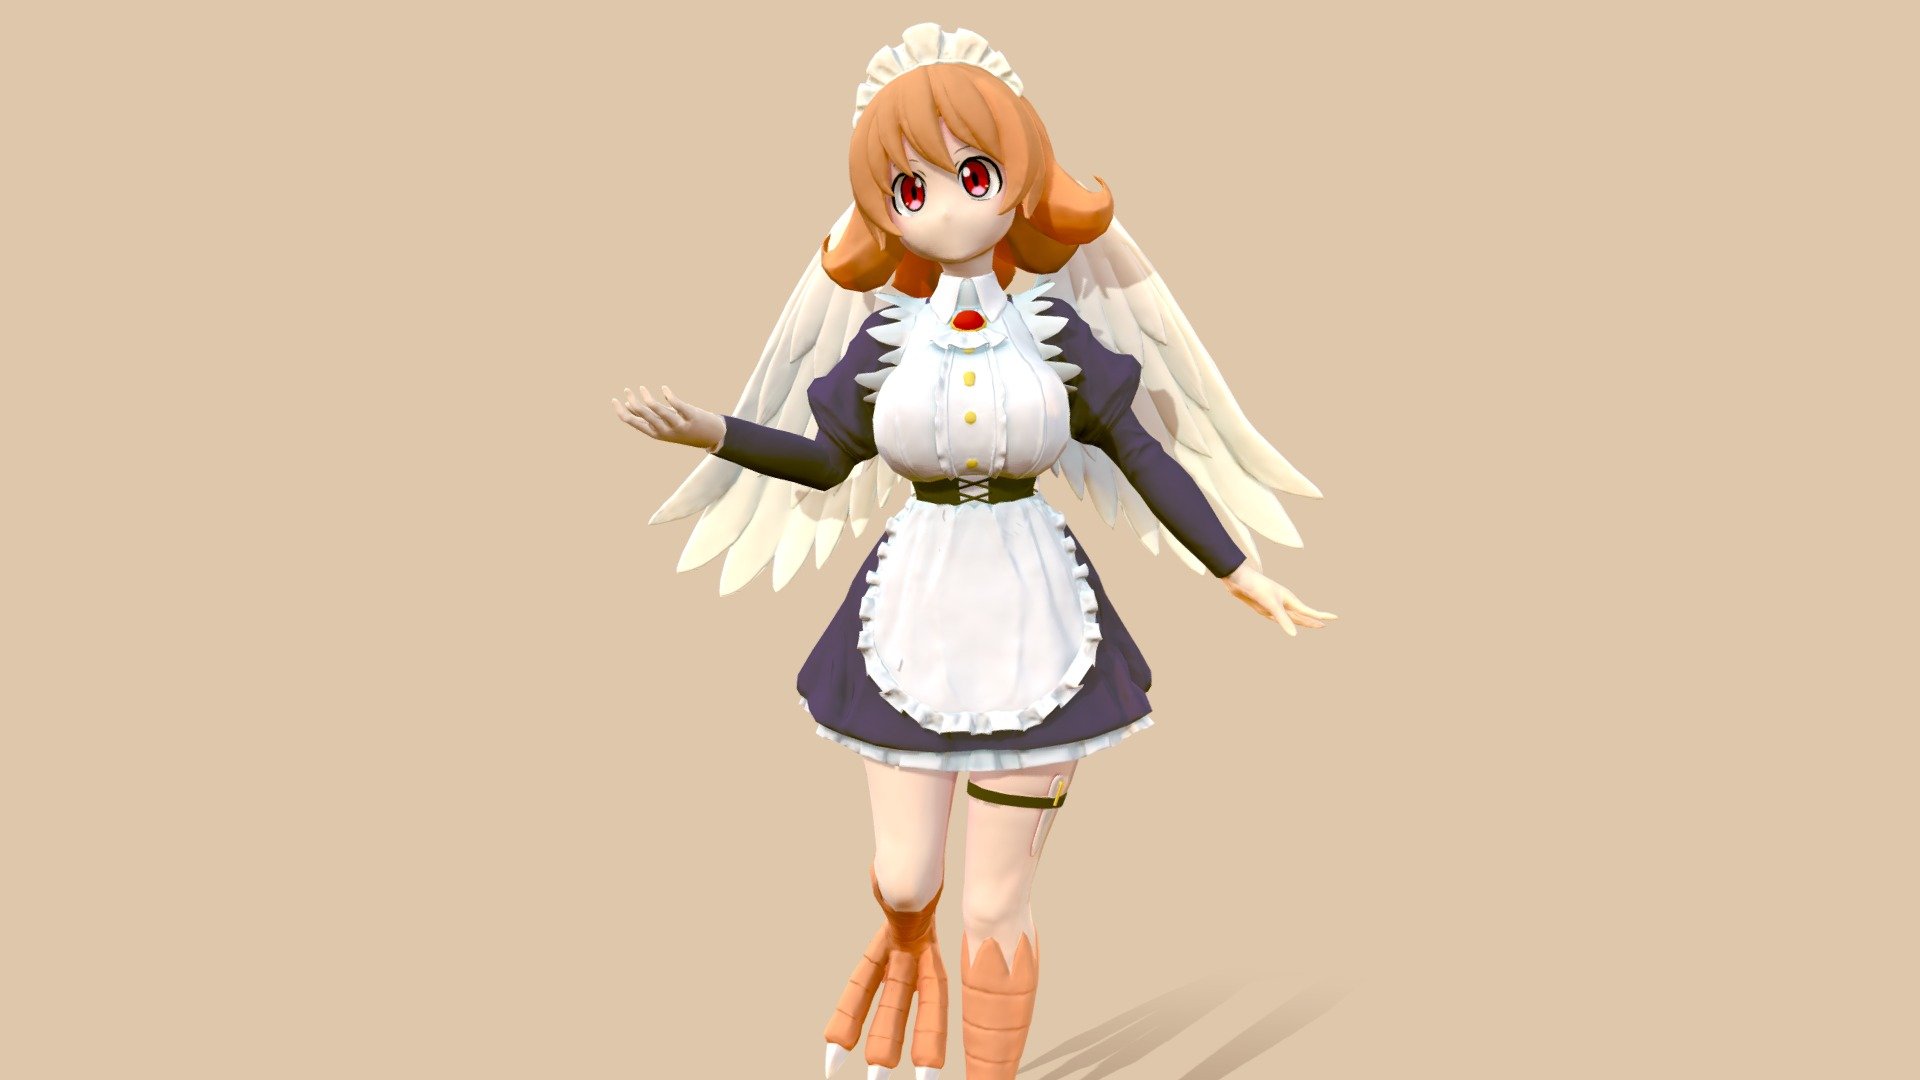 Fan art (Ishuzoku reviewers)
フィギュアっぽくしたかった。ウェイトとテクスチャは間に合わせです。 - Meidori - 3D model by khata 3d model